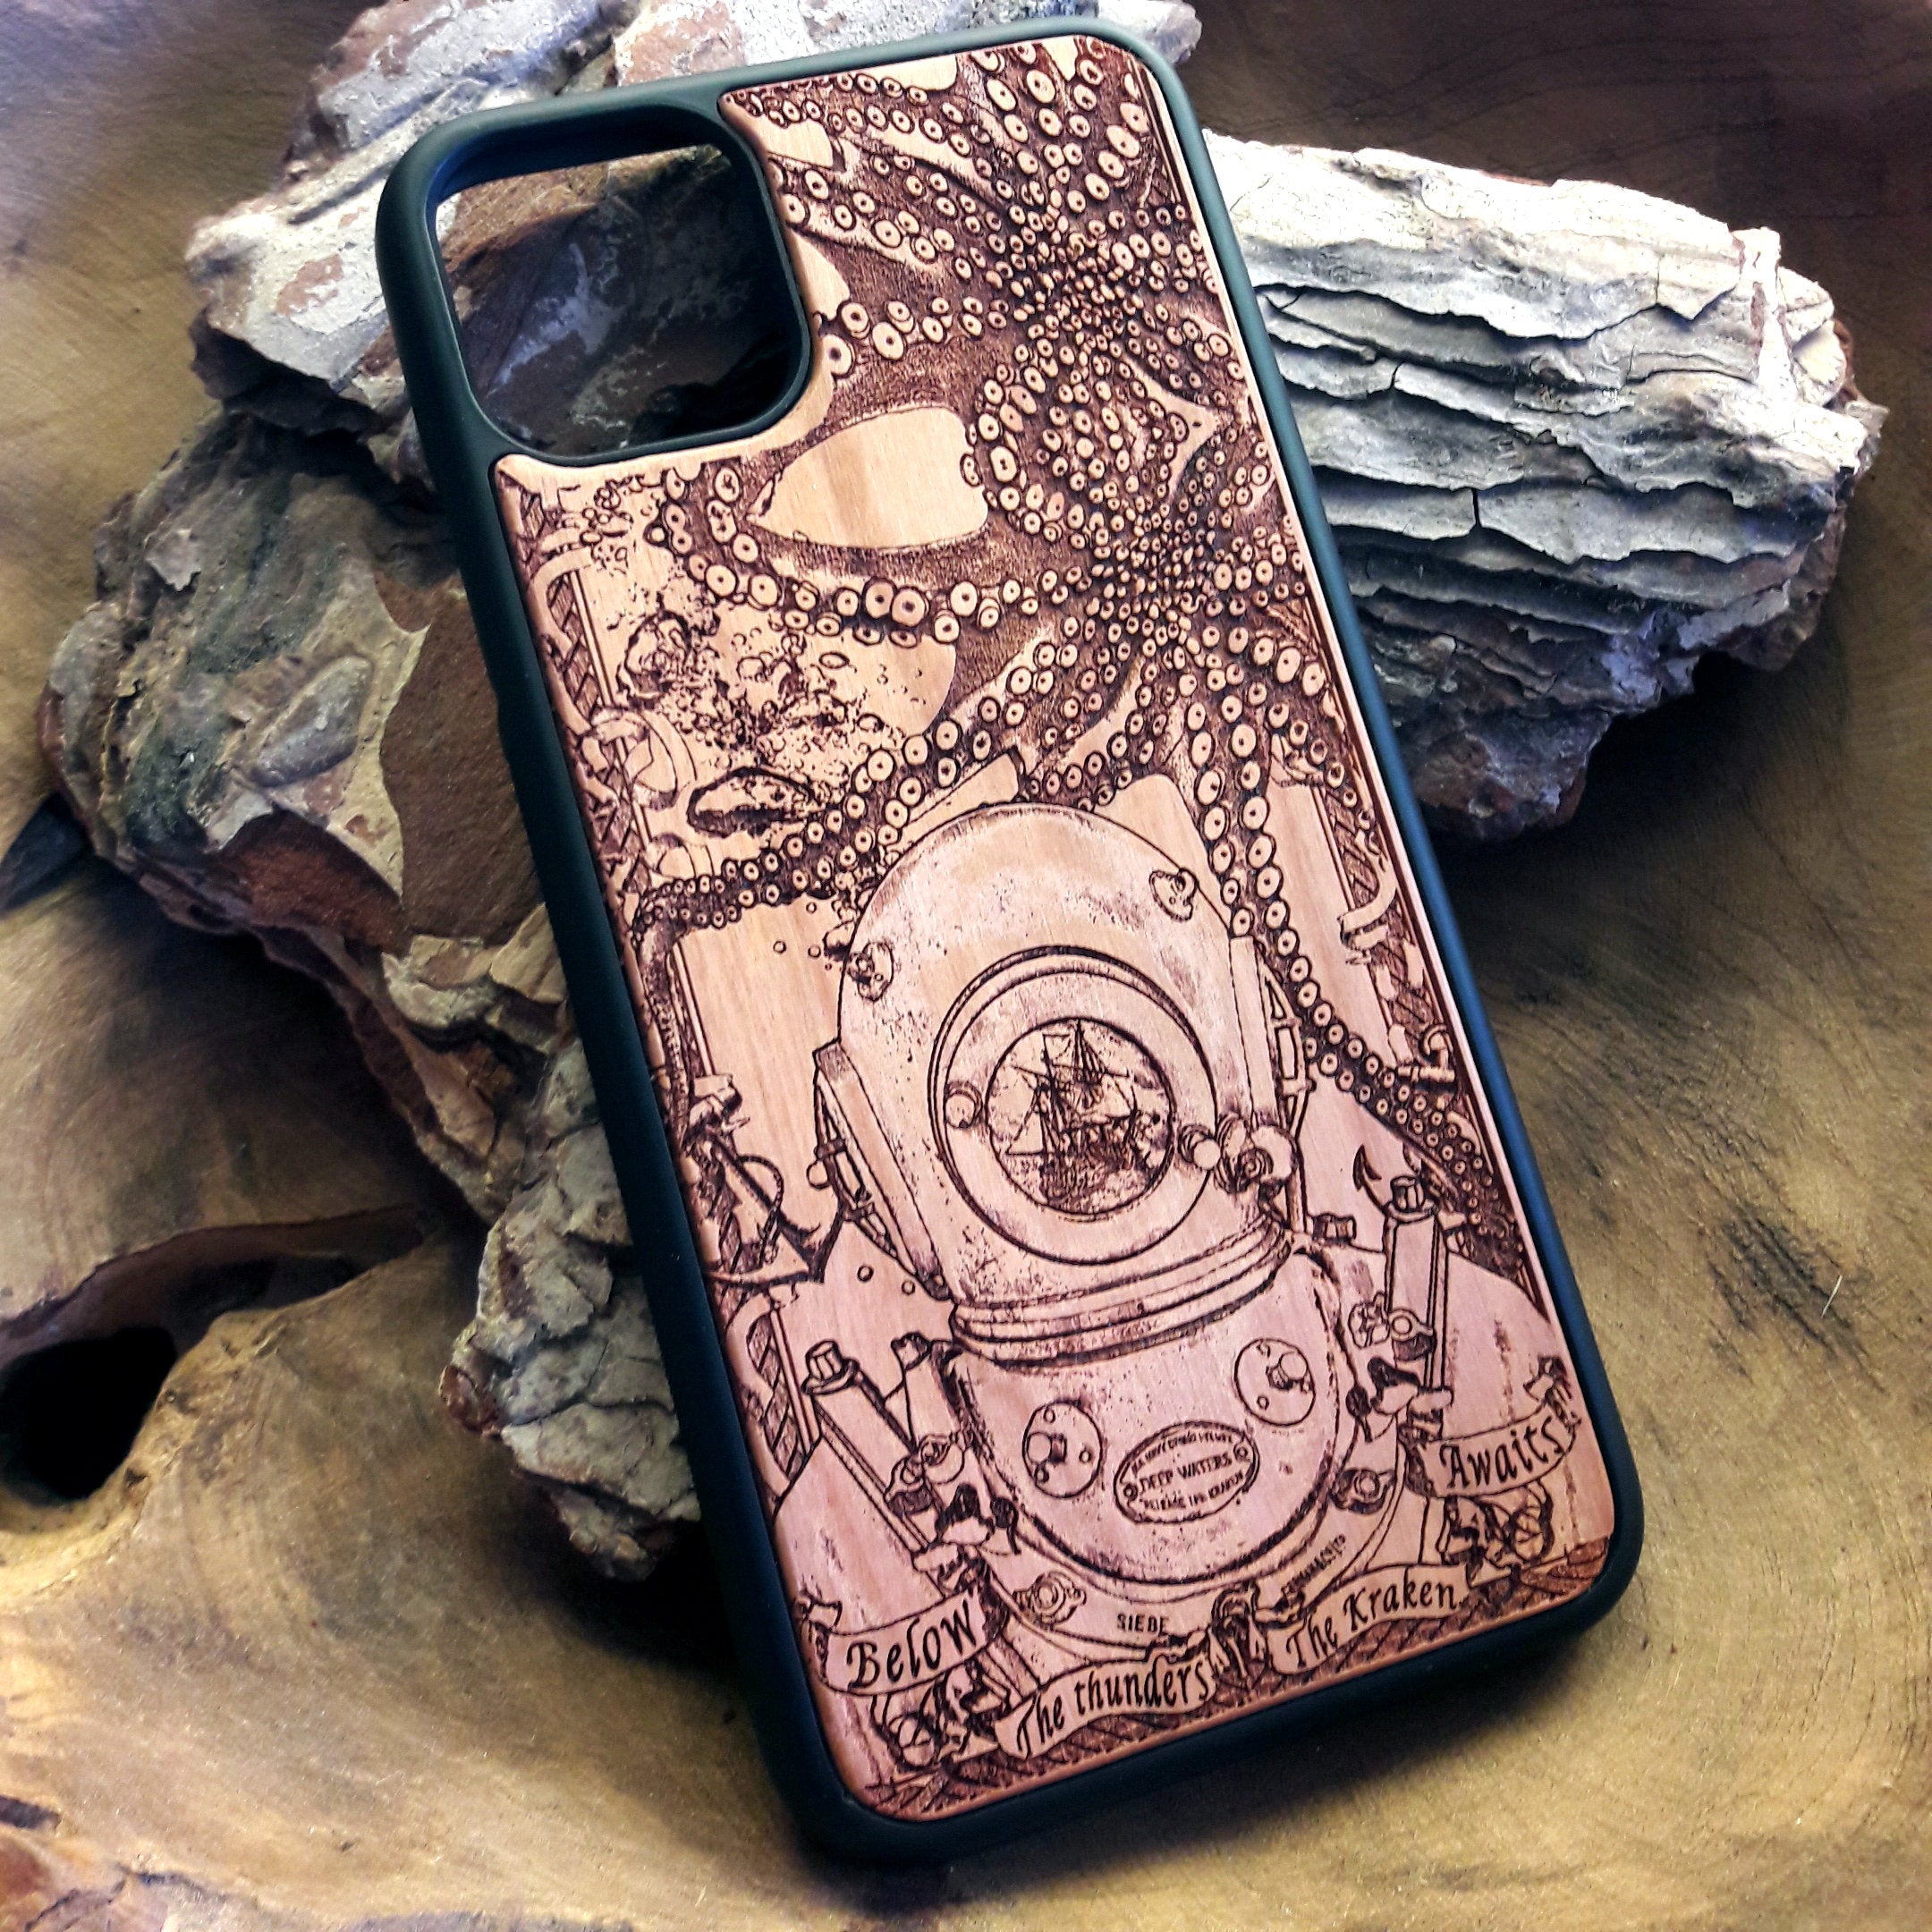 iphone 12 pro wood case